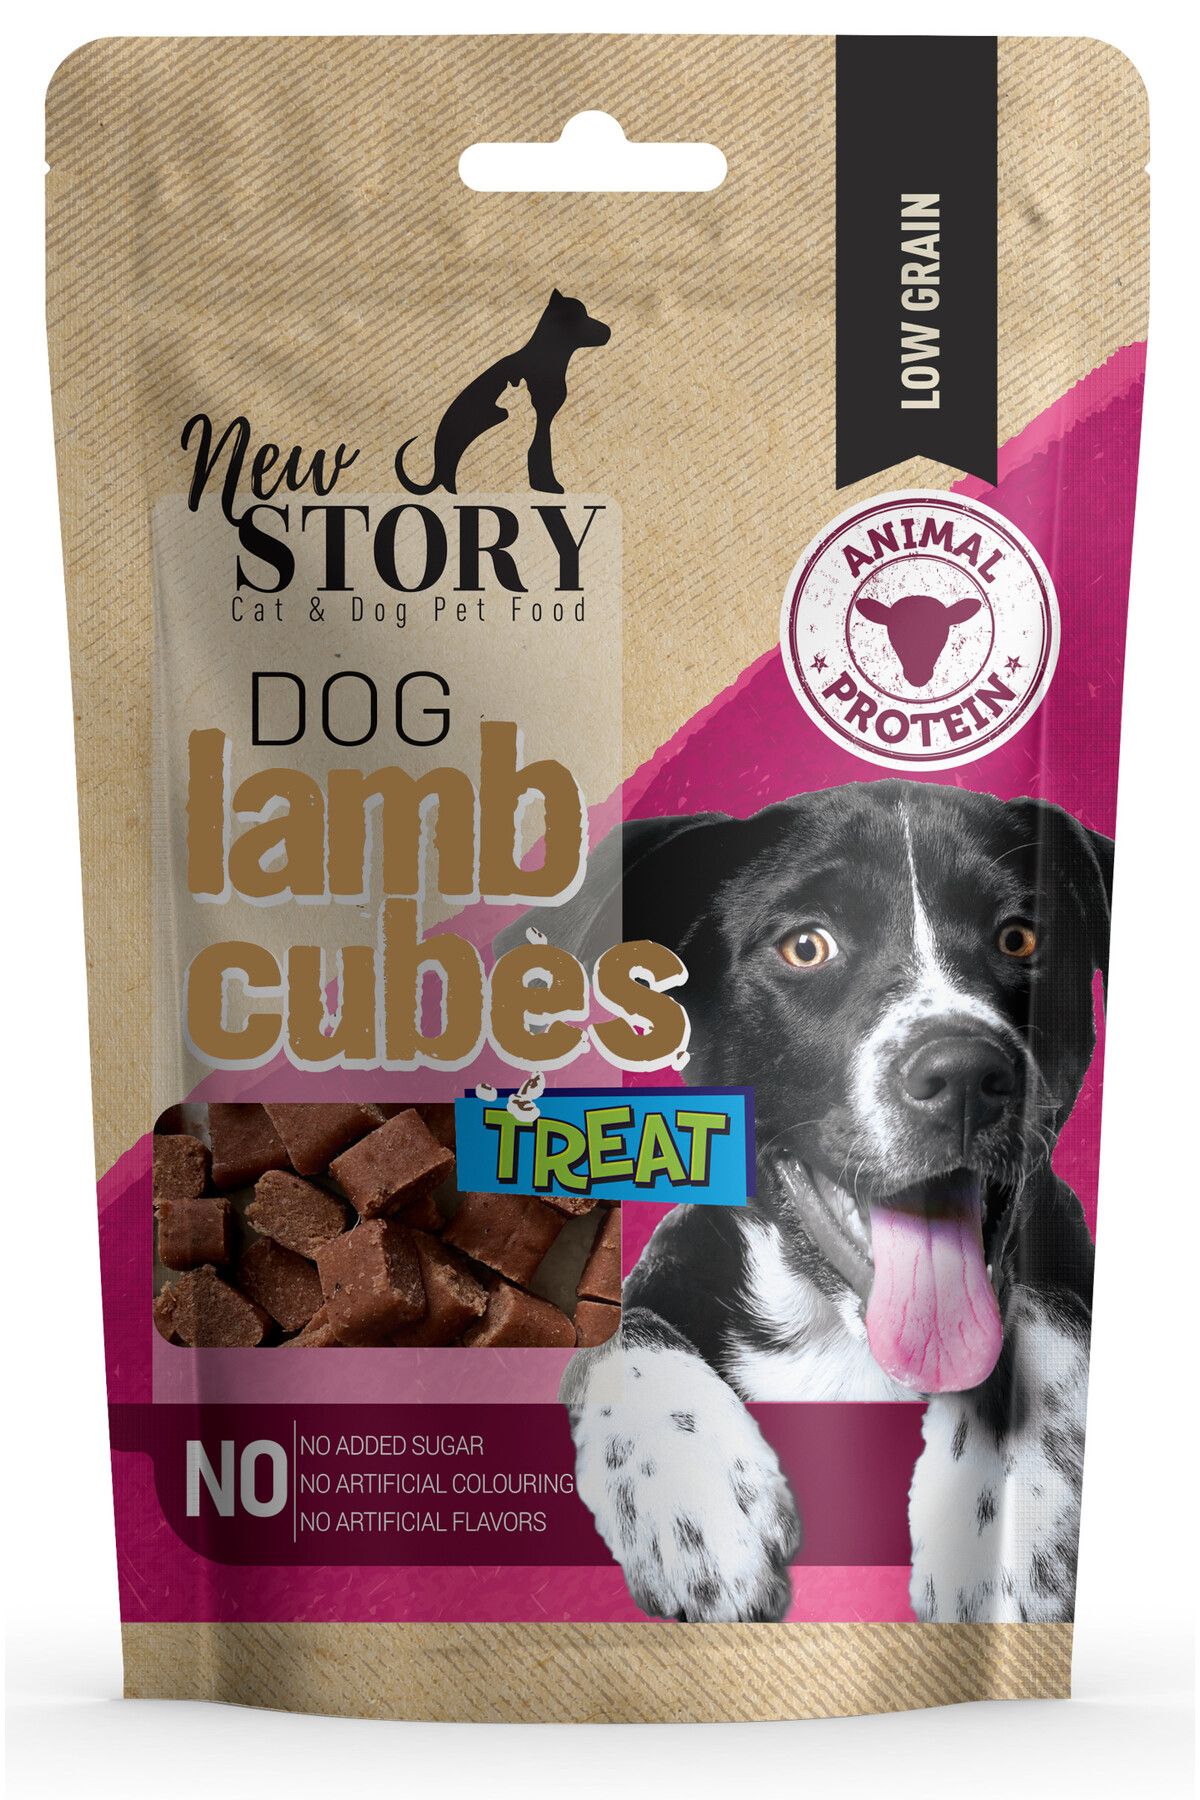 New Story Dog Lamb Cubes 80gr, Salmon Cubes 80gr Somonlu ve Kuzulu Kopek Odul Mamasi